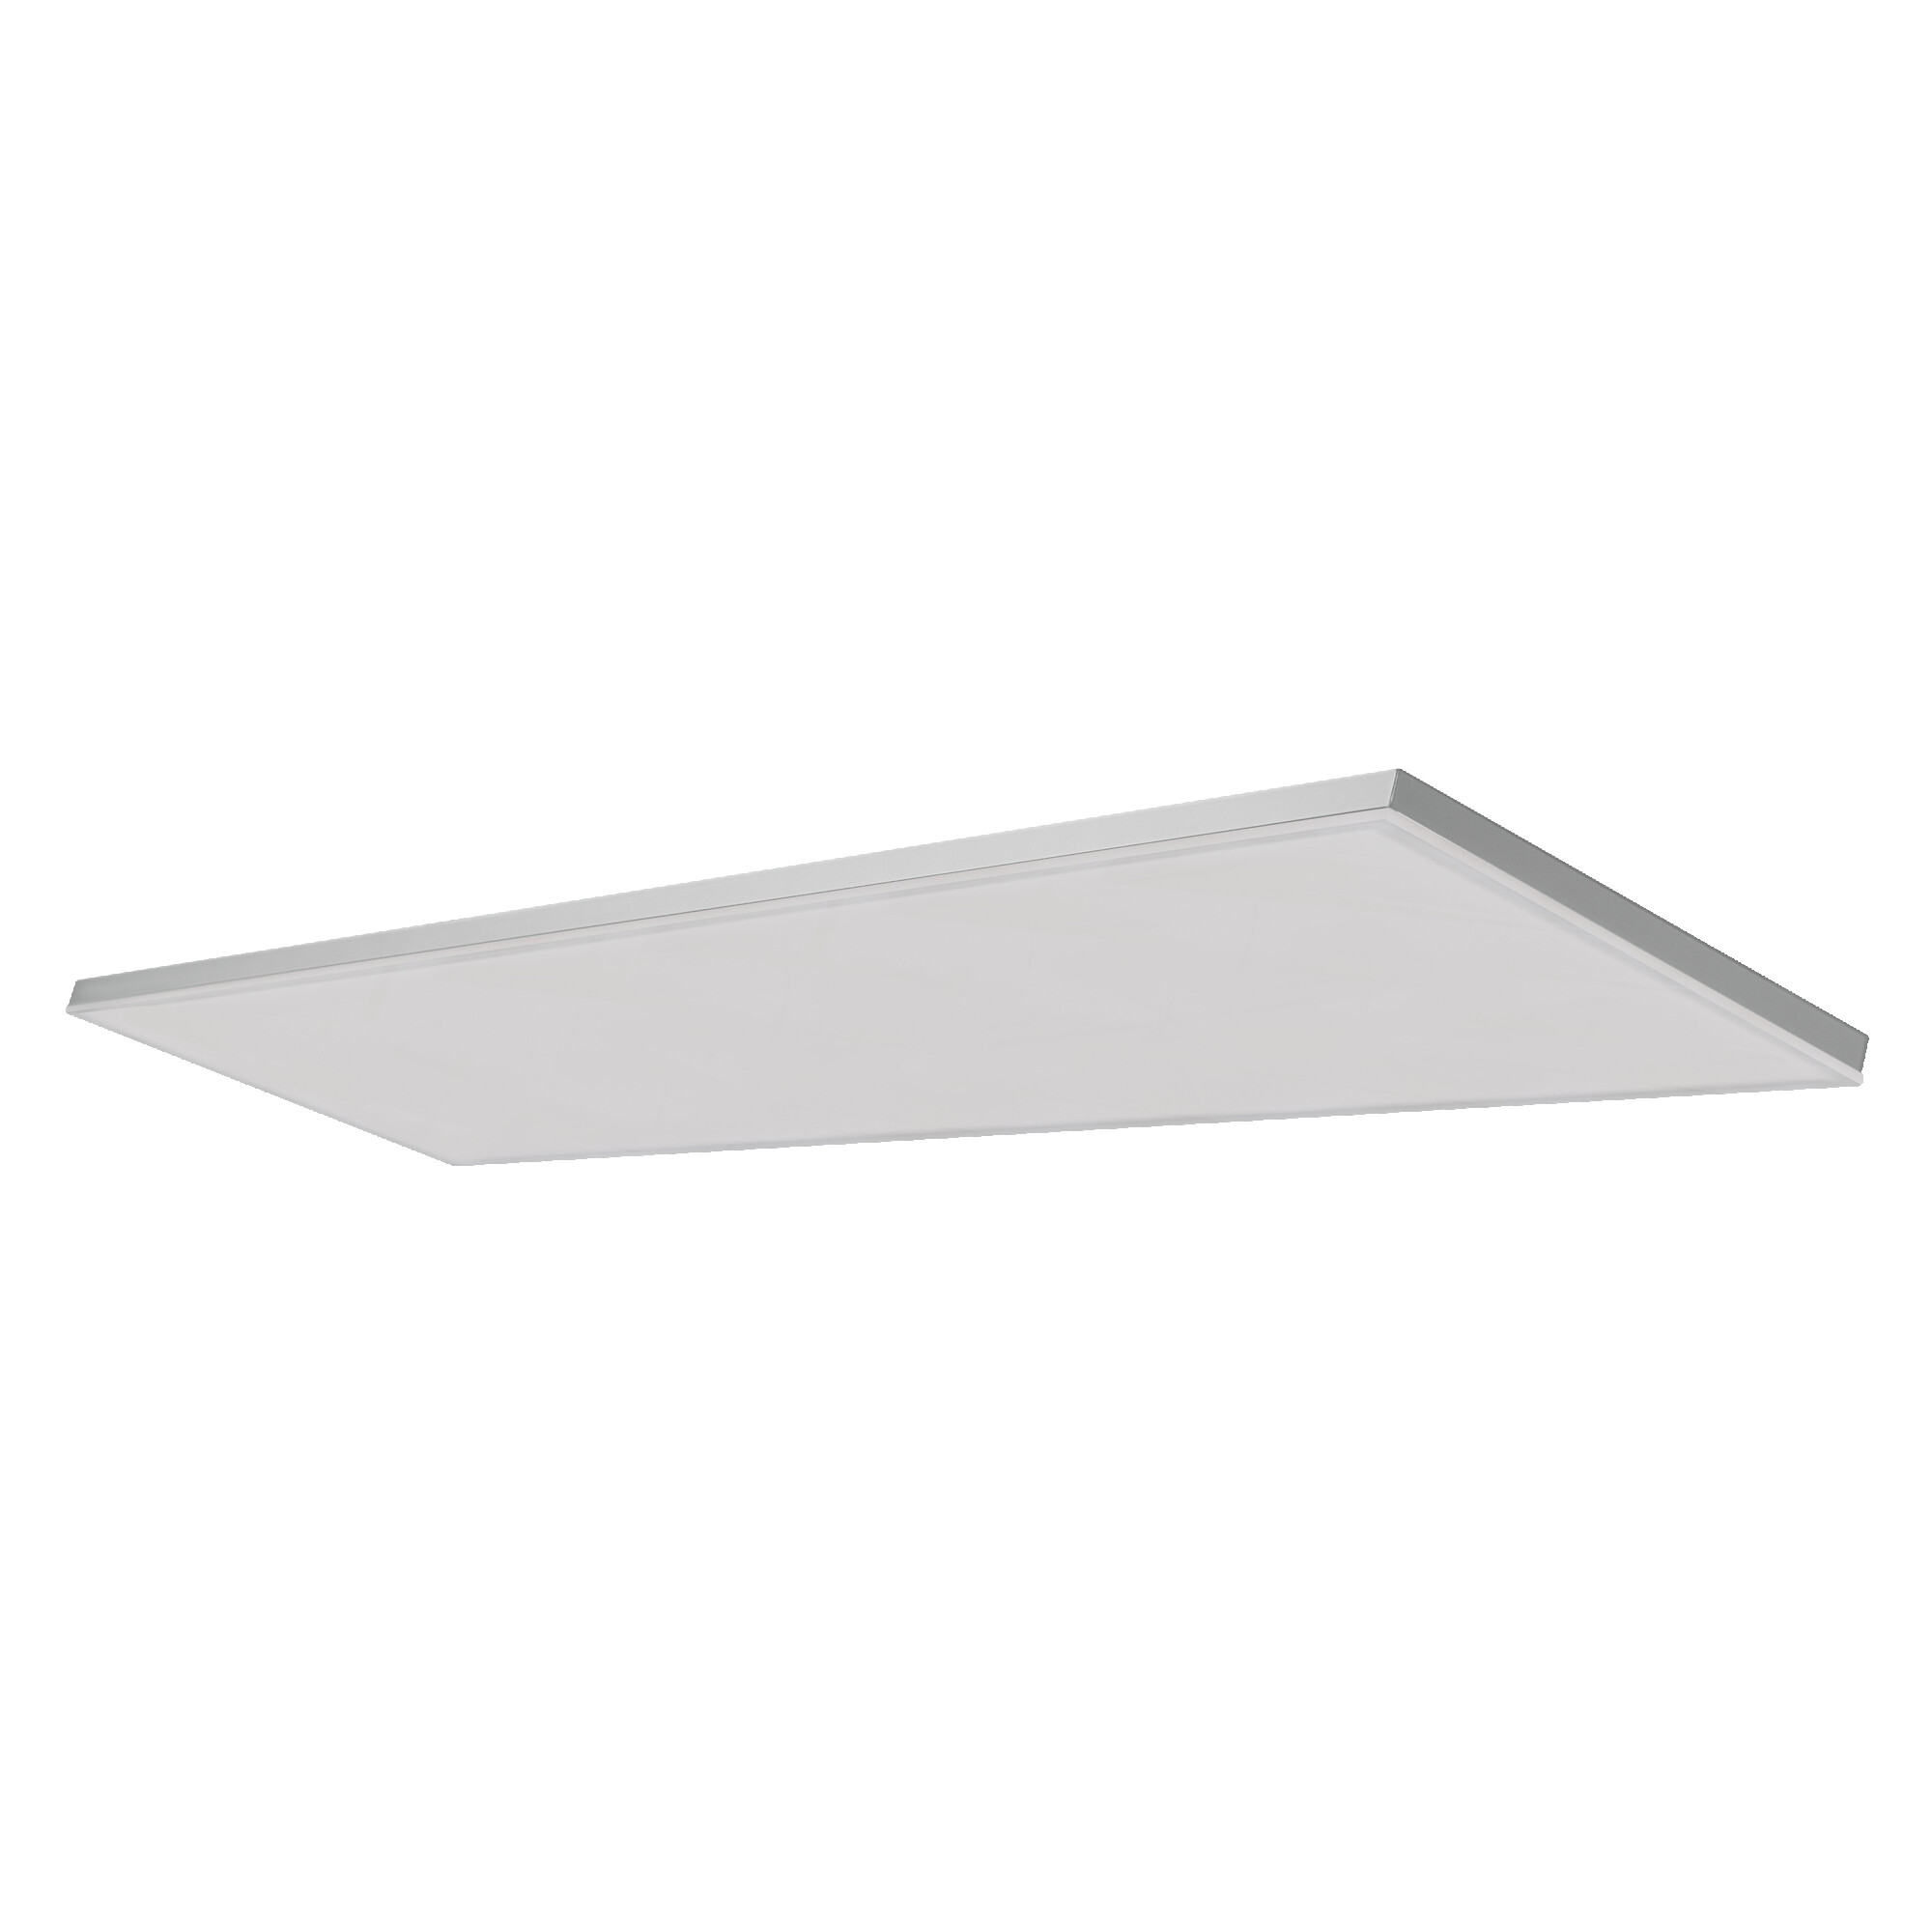 LED-Panelleuchte 'Planon' weiß 120 x 30 cm 3400 lm + product picture